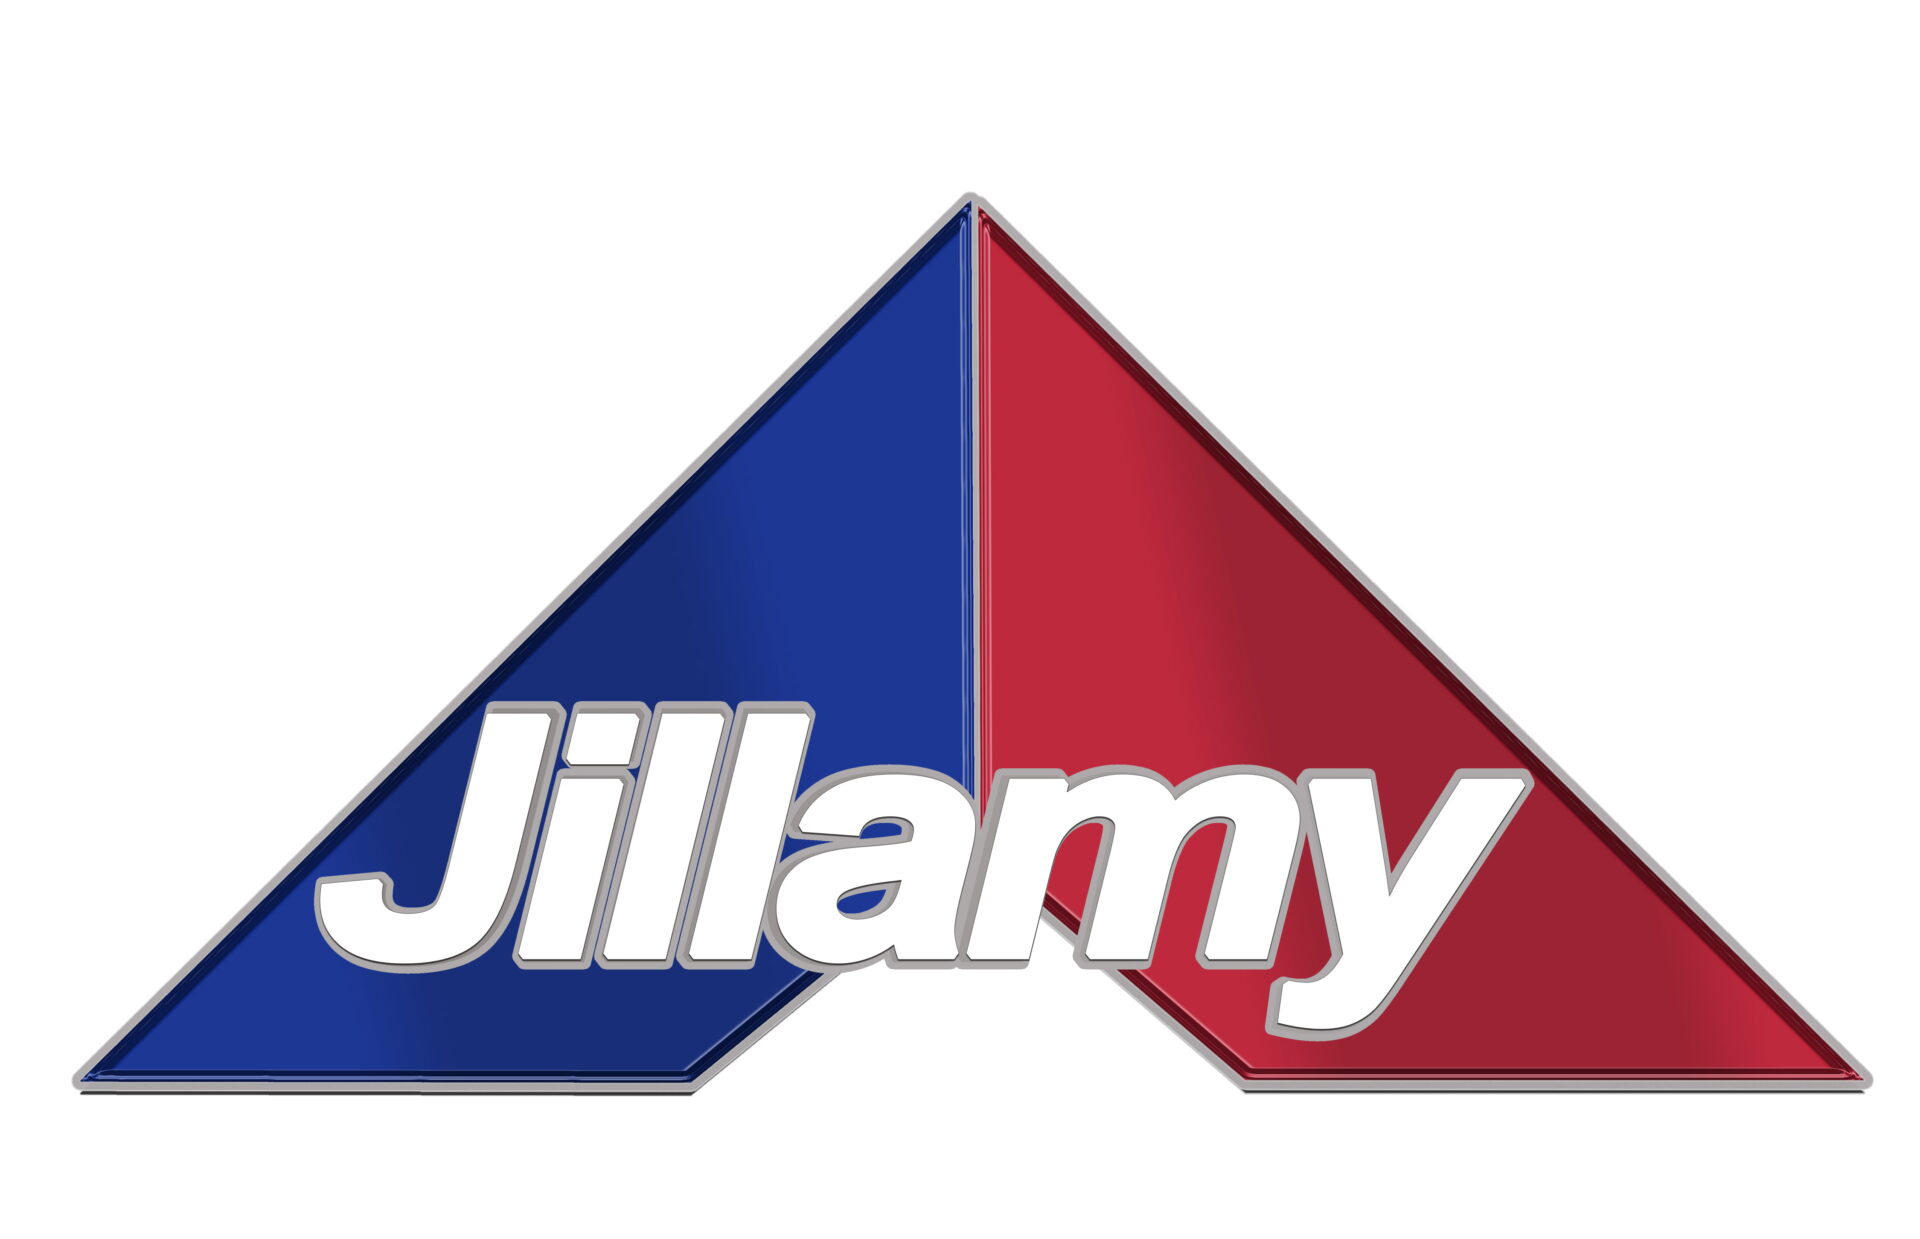 Jillamy